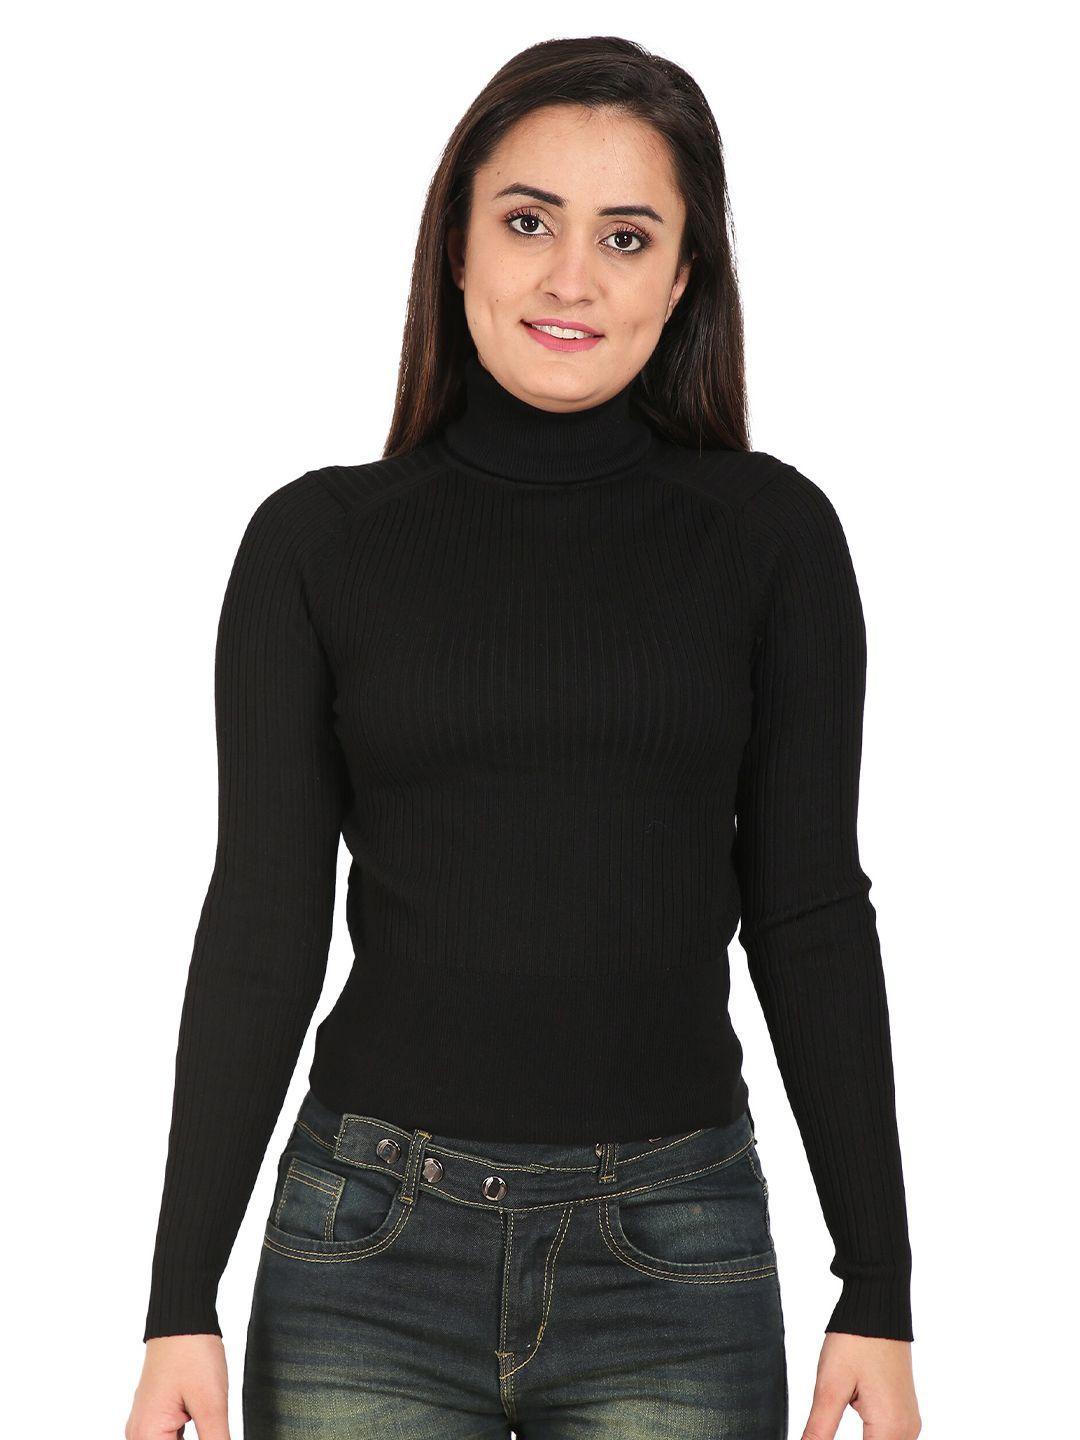 nobarr-women-black-pullover